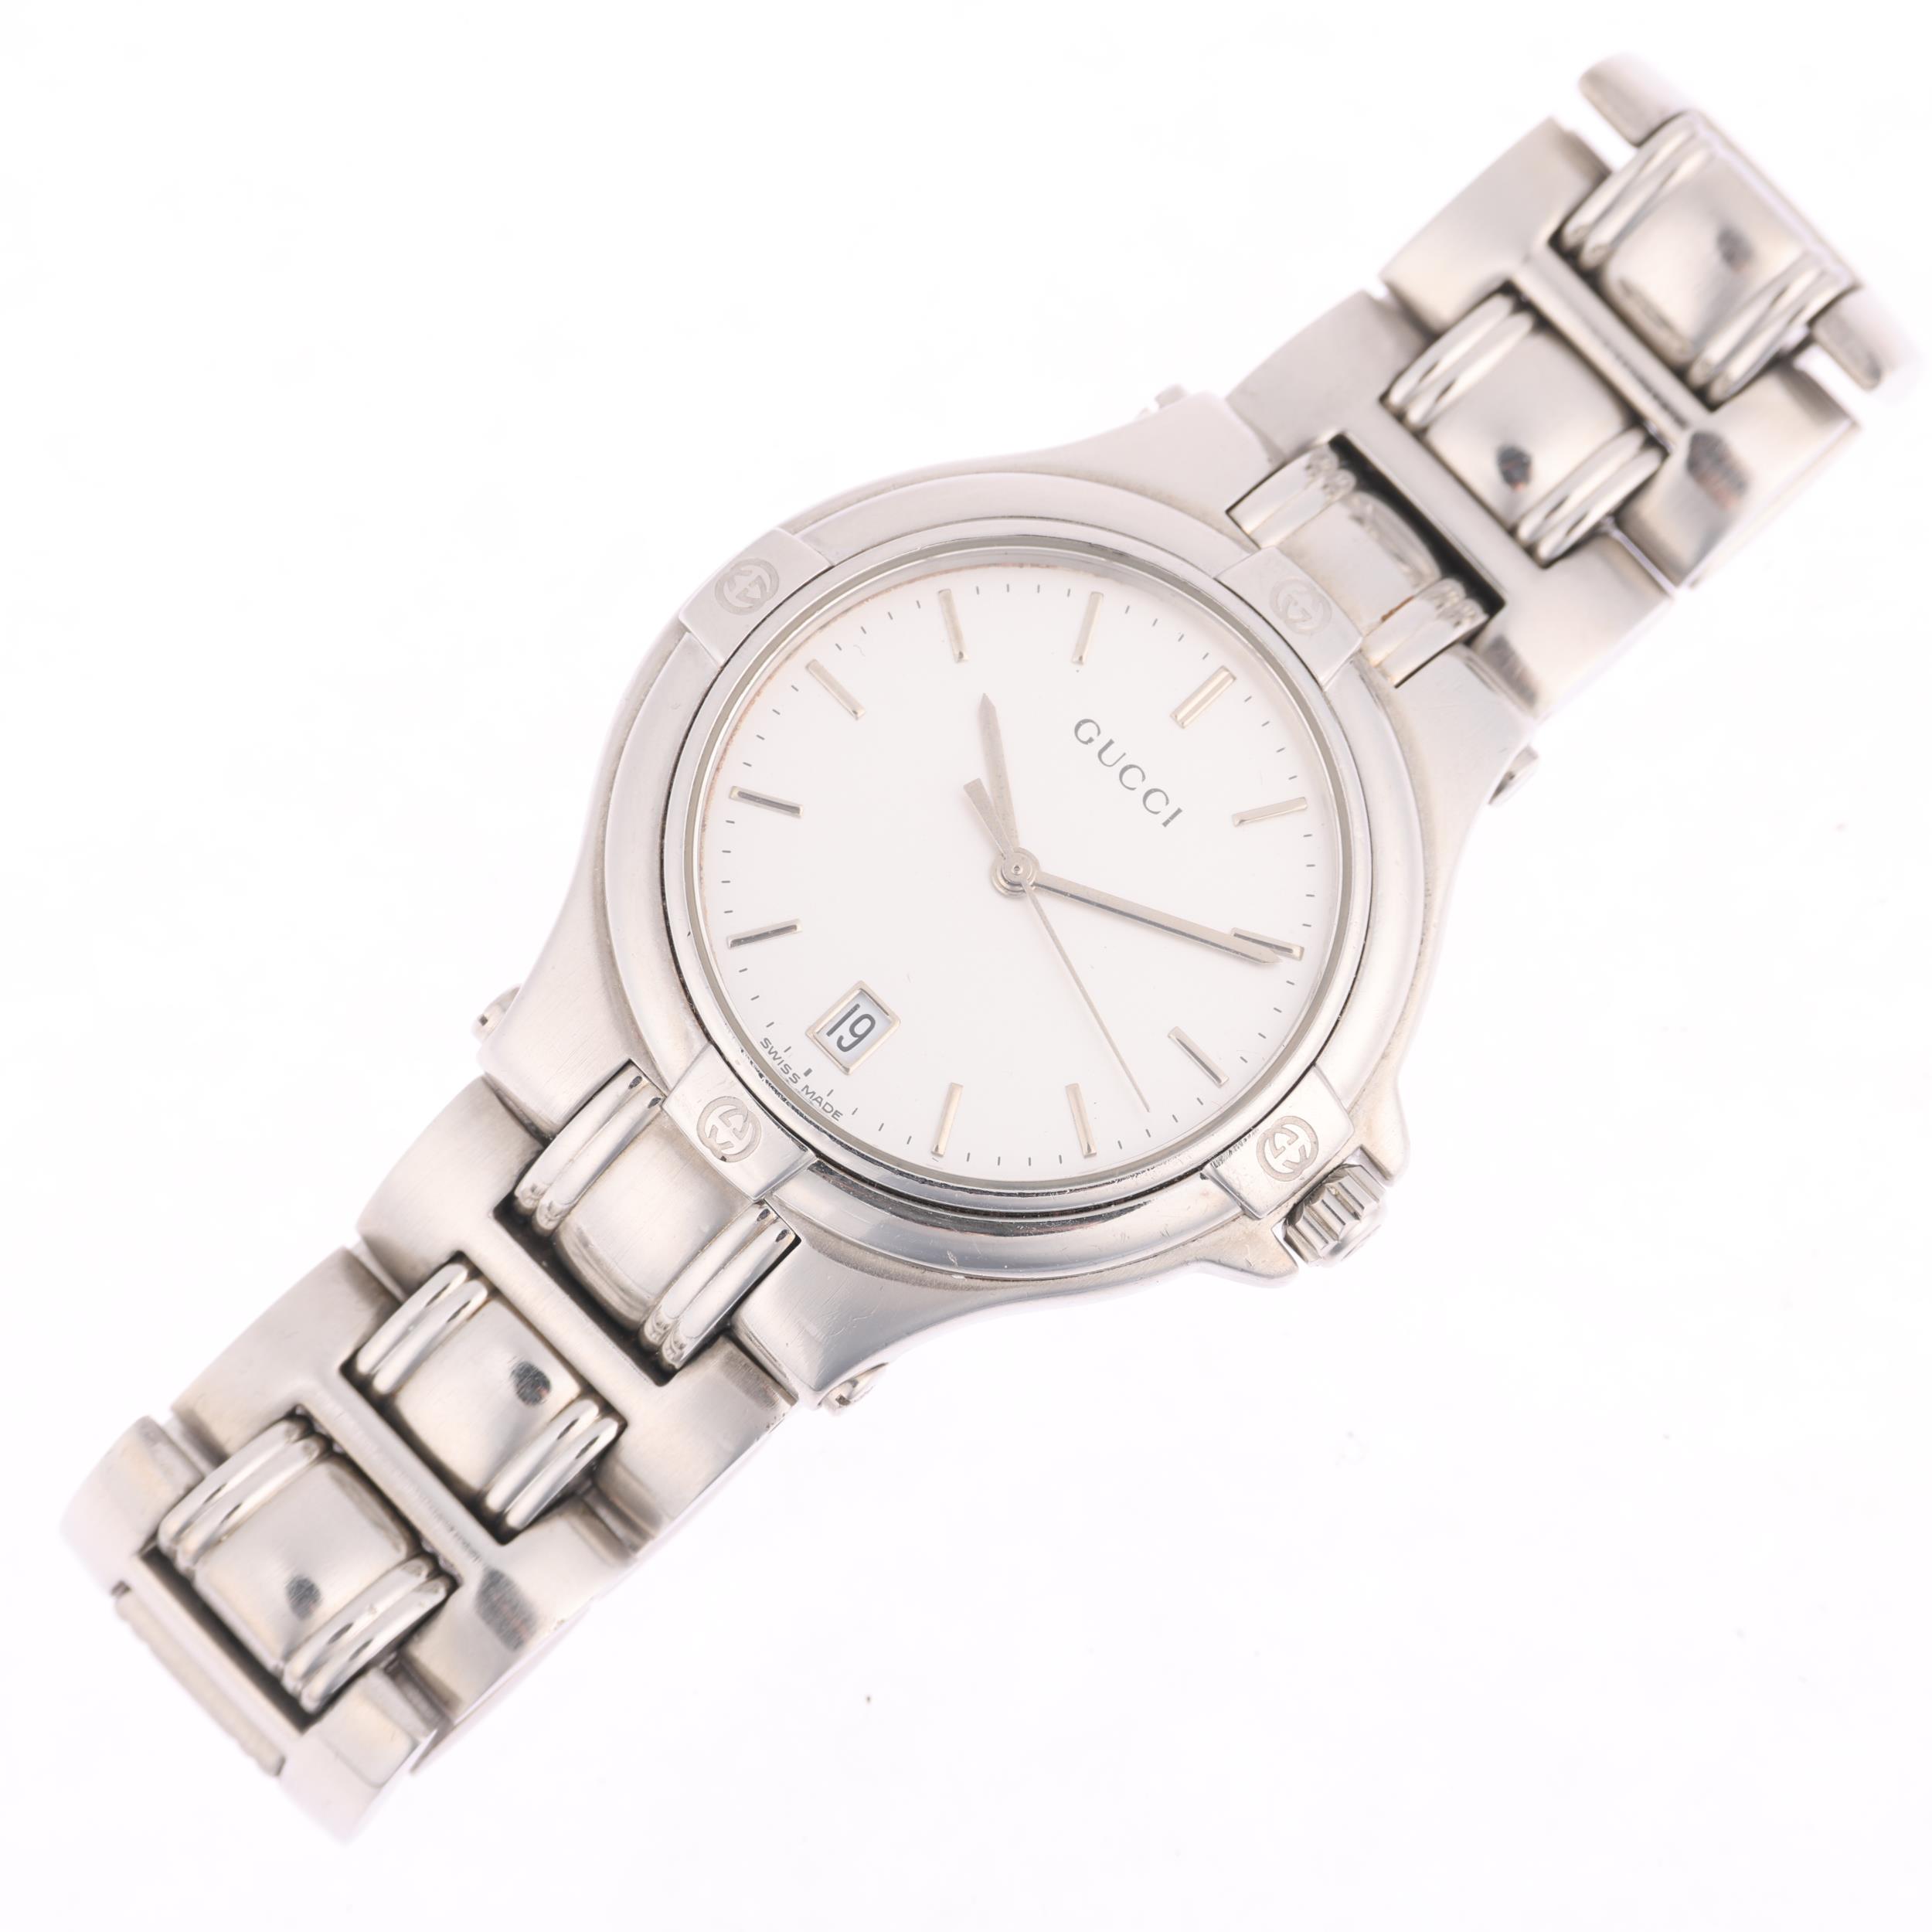 GUCCI - a stainless steel 9040M quartz calendar bracelet watch, silvered dial with baton hour - Bild 2 aus 5